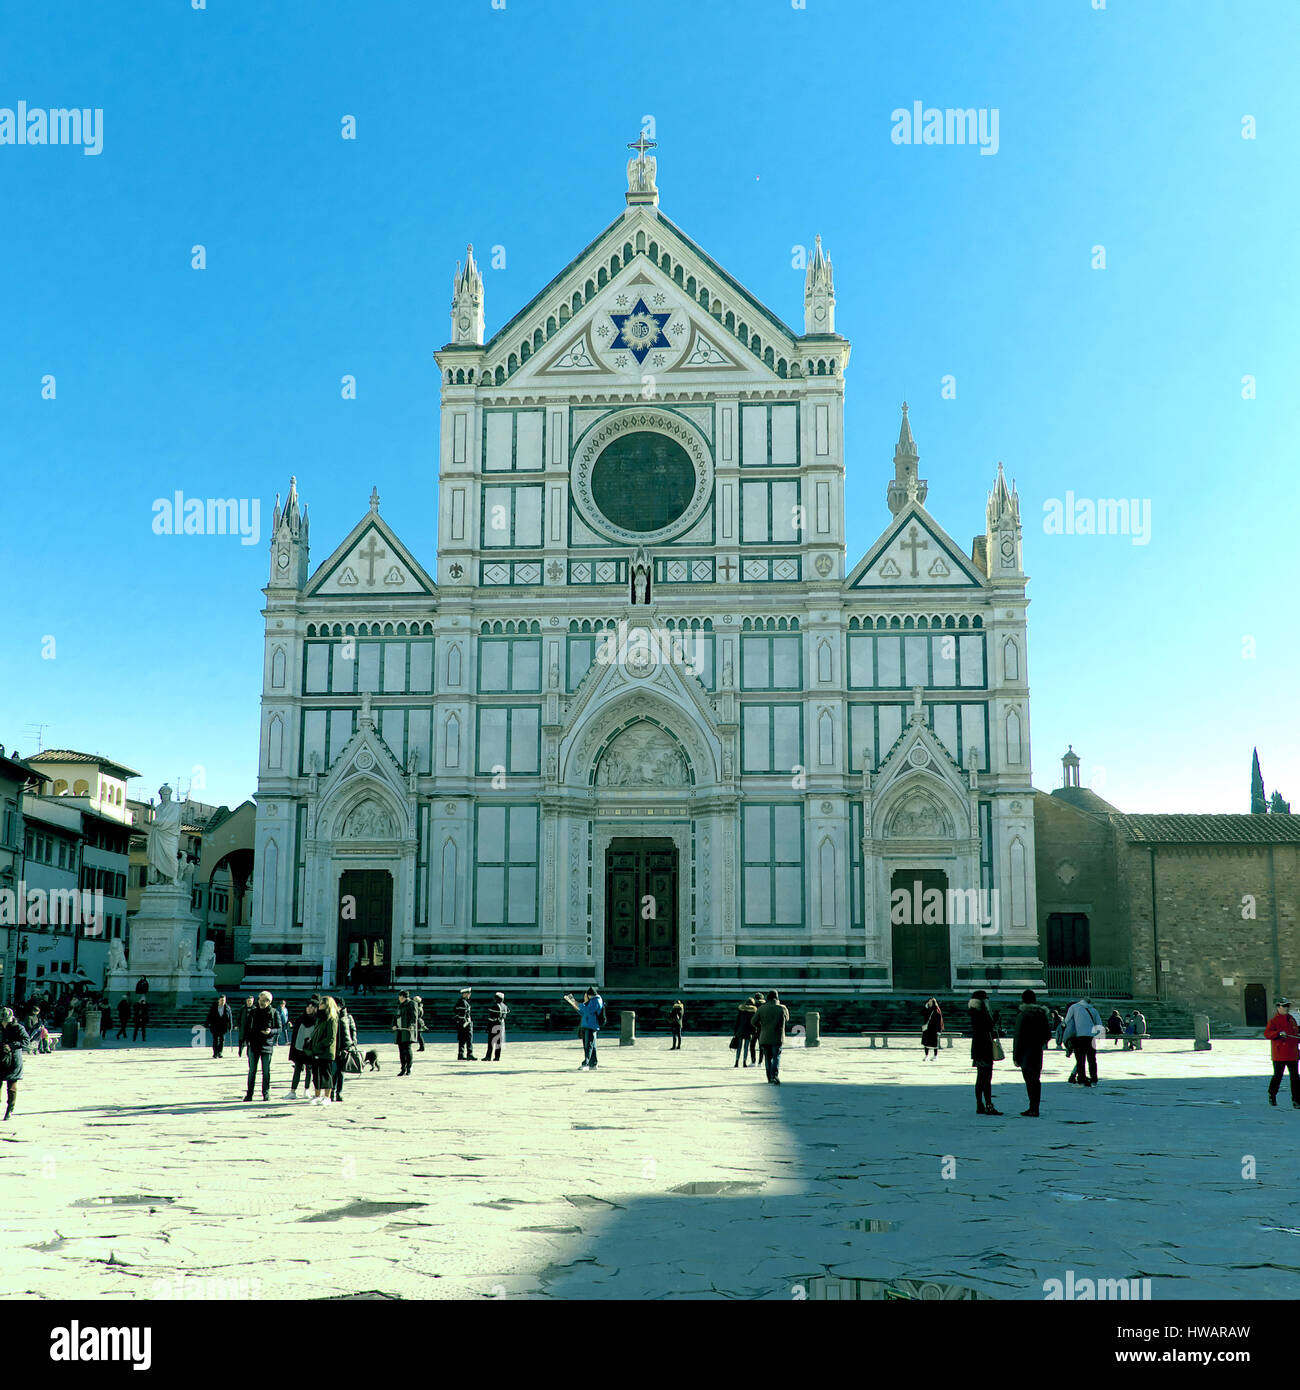 Firenze Santa Croce - Basilica Santa Croce Church Facade - Piazza Santa Croce - Florence, Tuscany, Italy, Europe Stock Photo